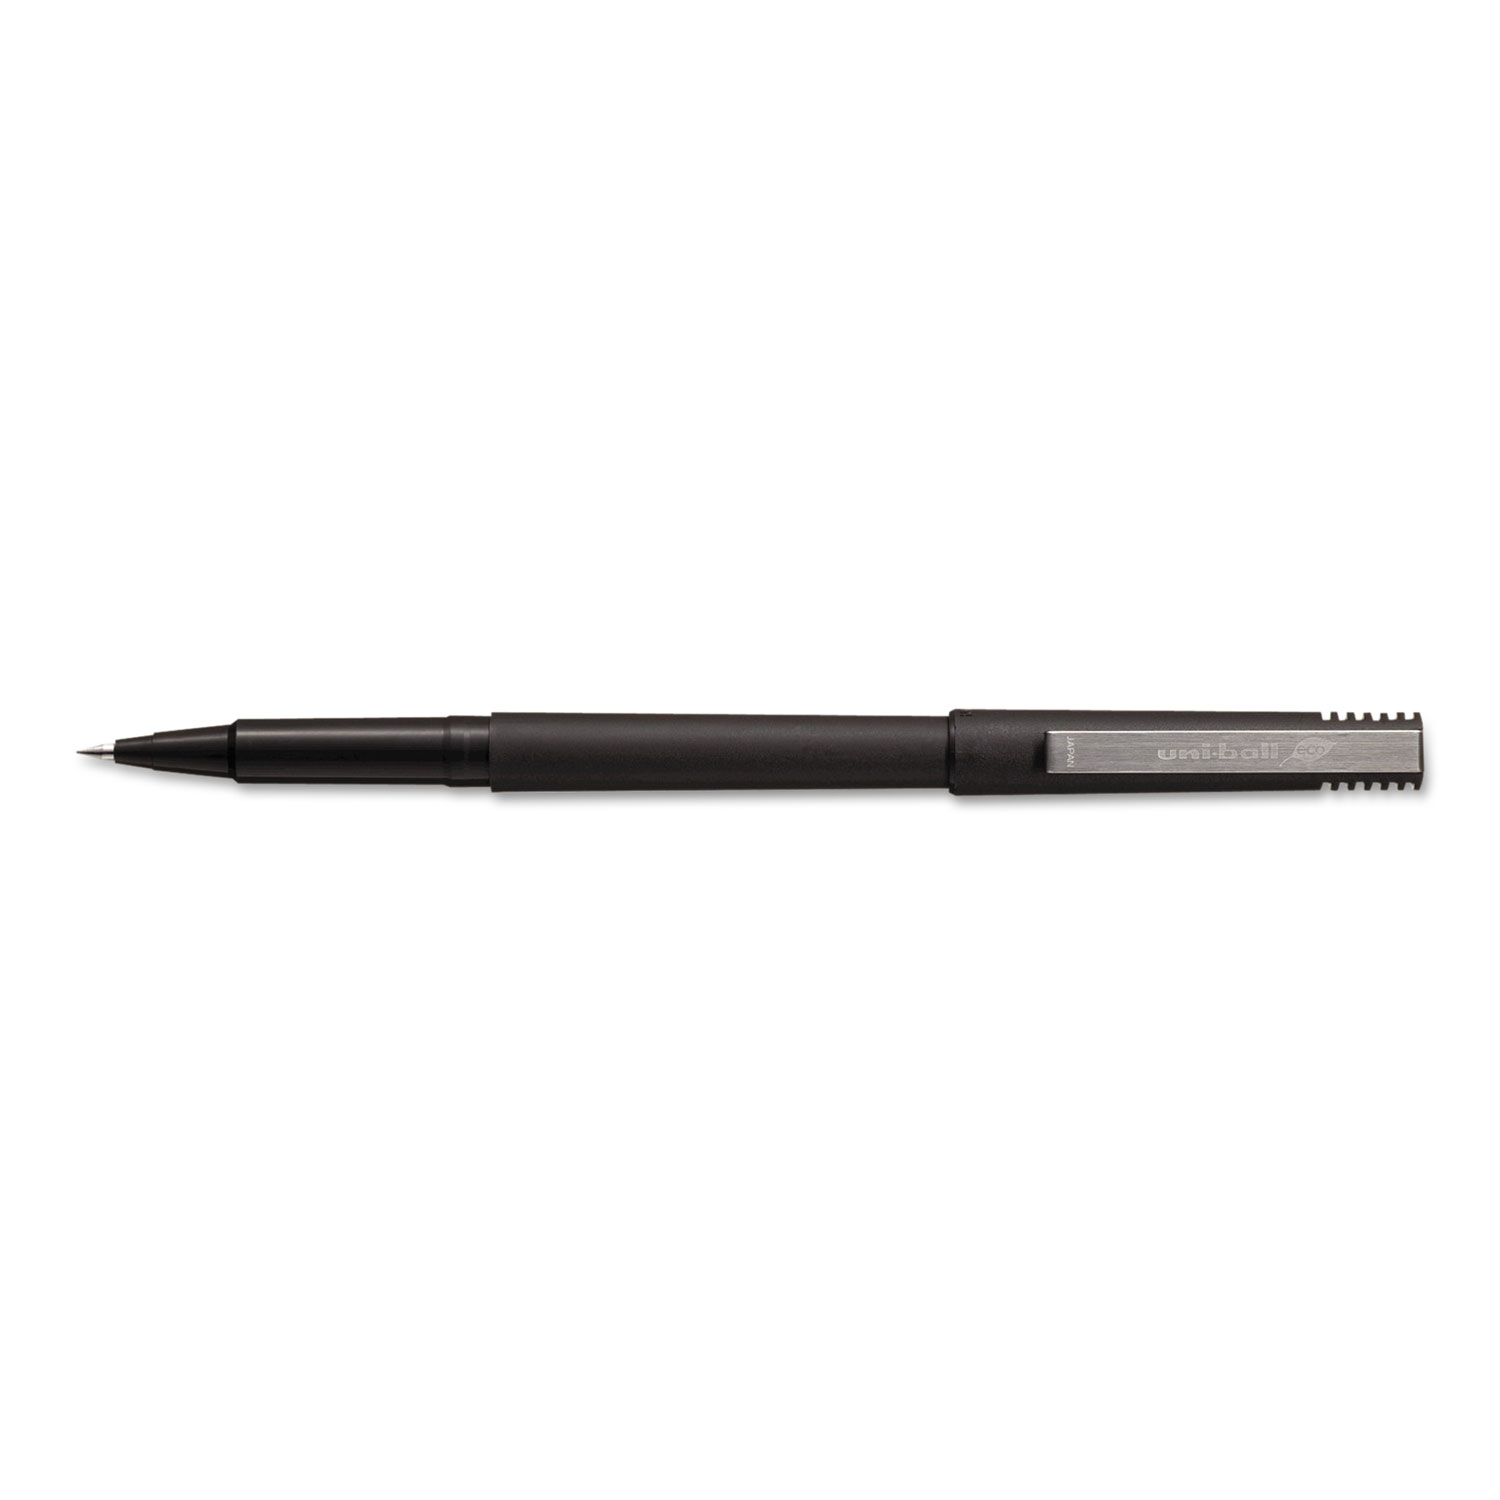  uni-ball 1921065 Stick Roller Ball Pen, Micro 0.5mm, Black Ink, Black Matte Barrel, 36/Pack (UBC1921065) 